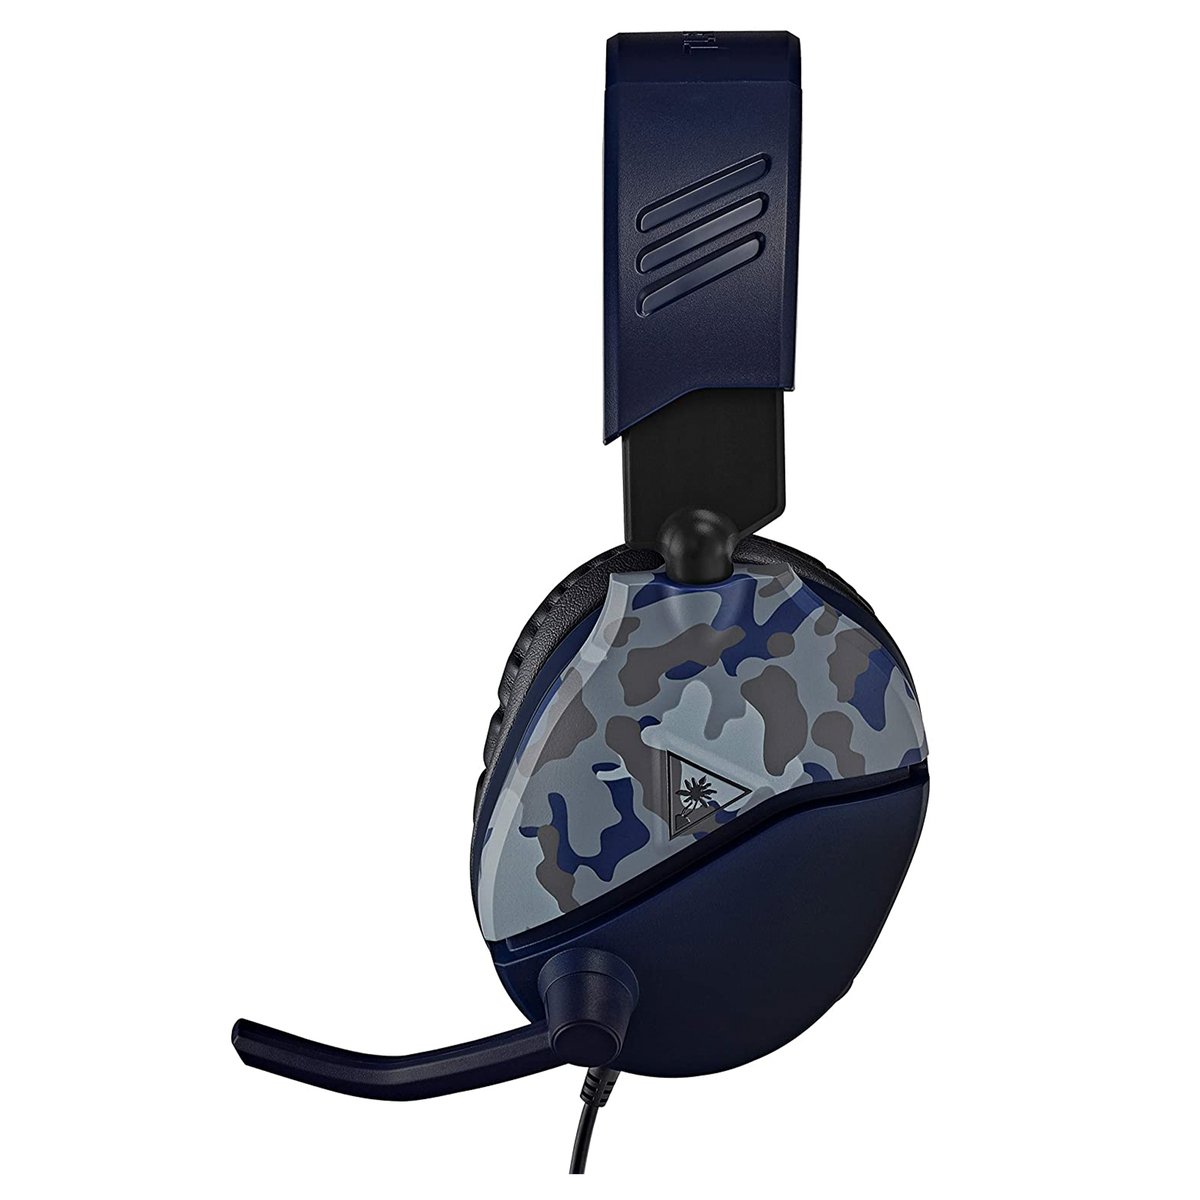 TurtleBeach Headset Ear Force Recon 70 Blue